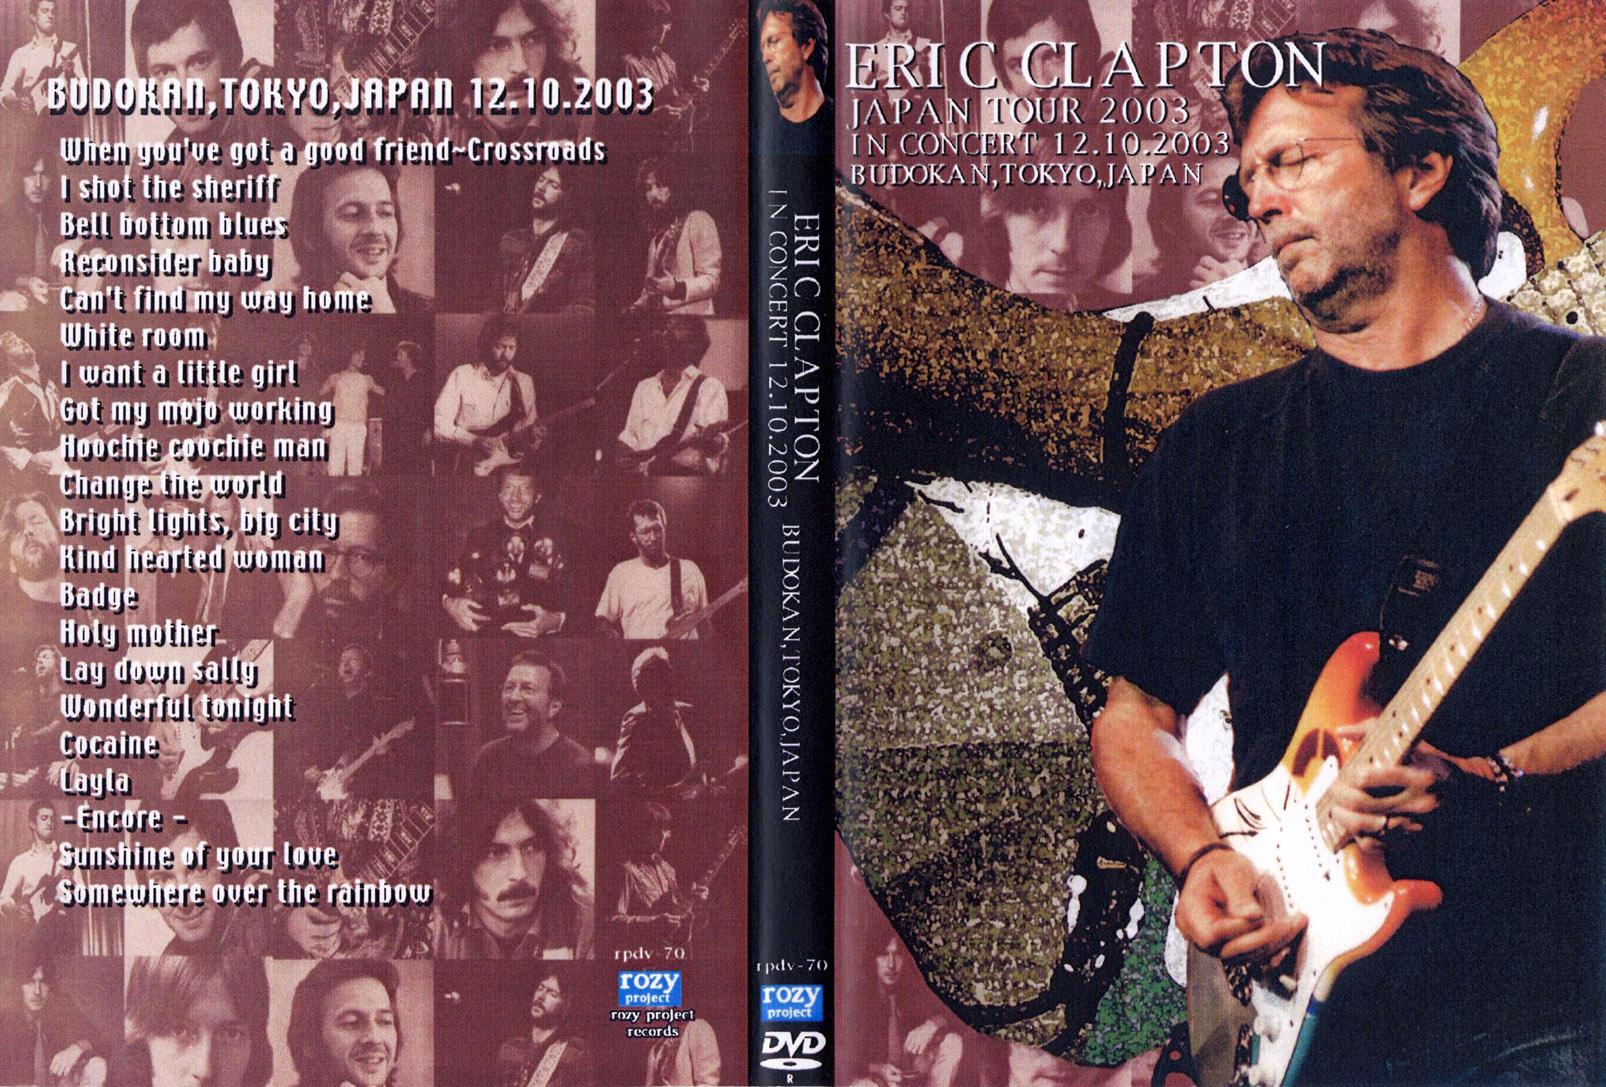 Eric Clapton - Budokan Theatre - December 10, 2003